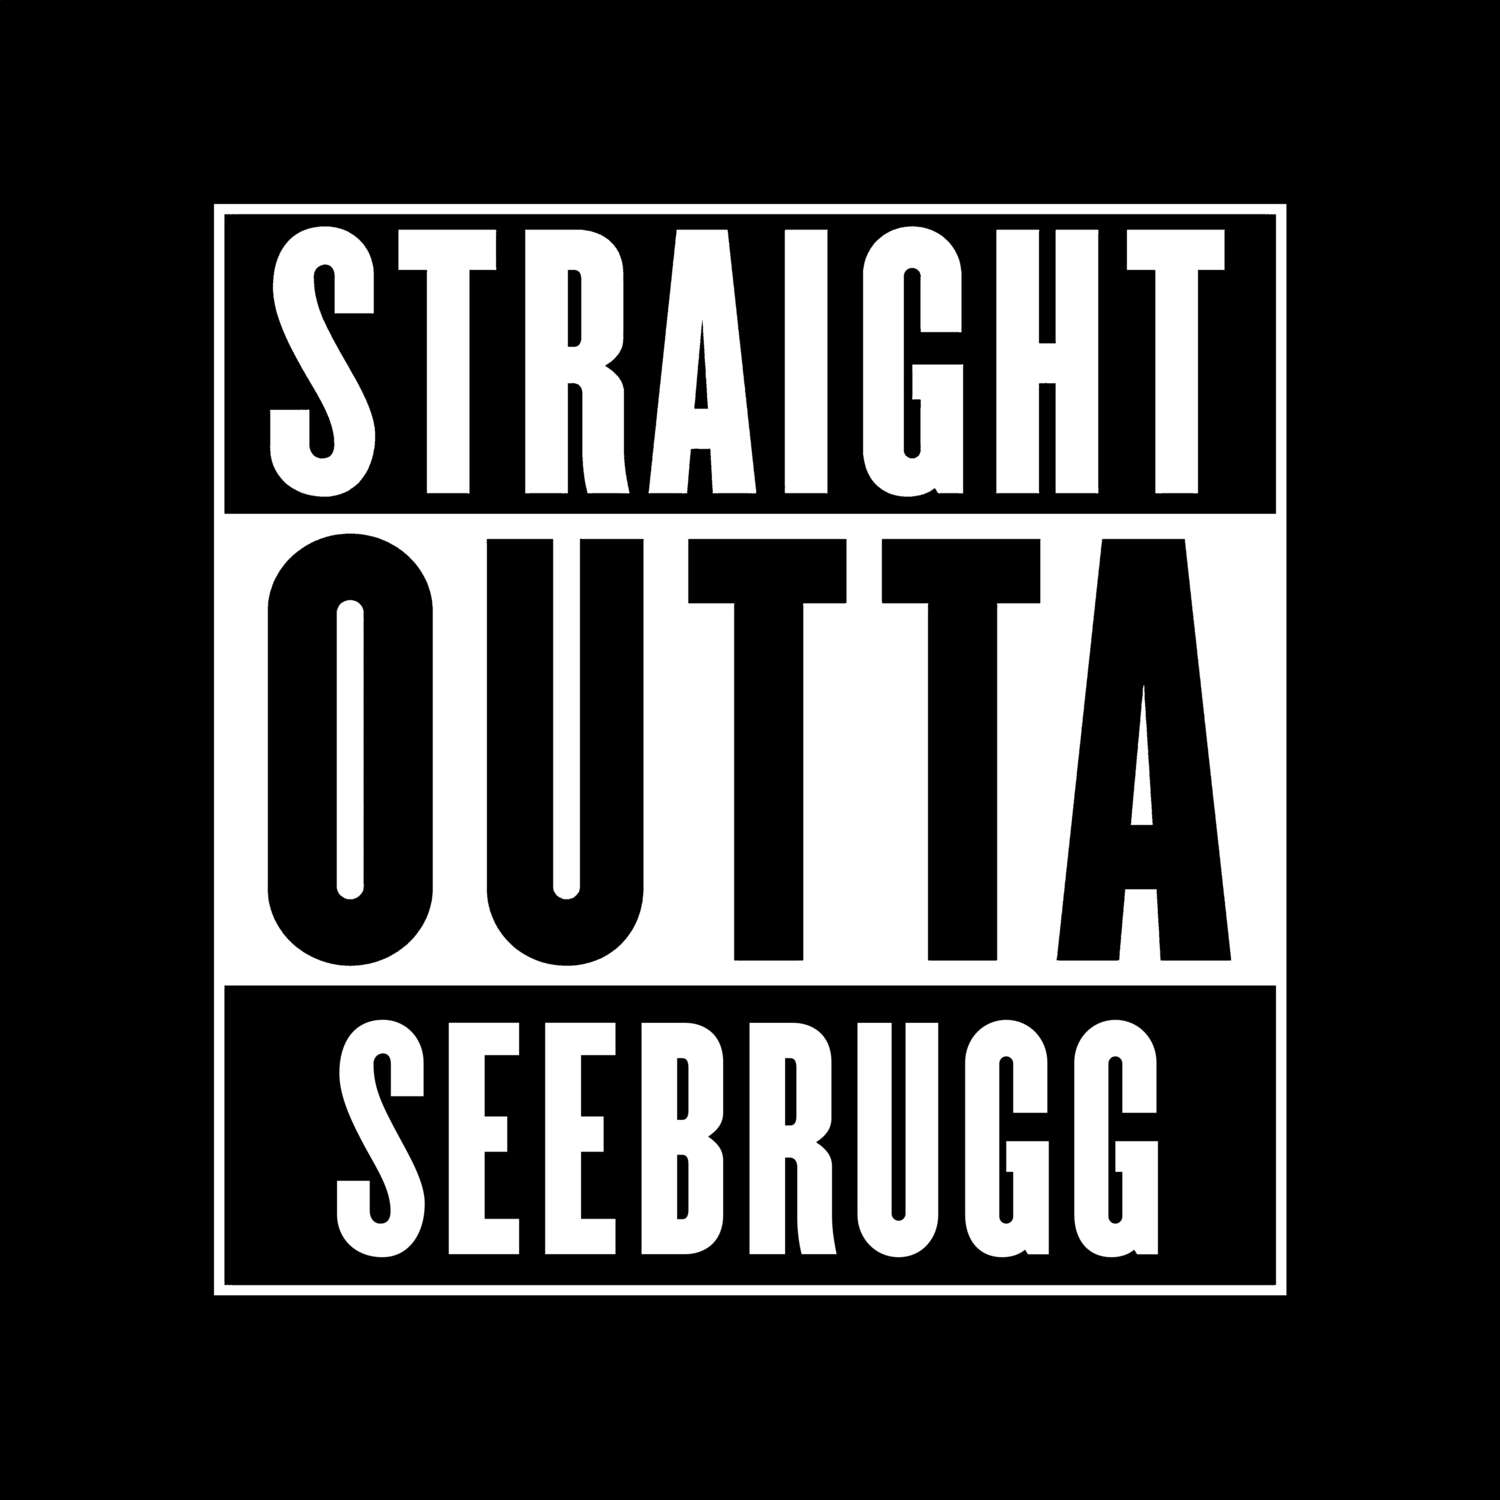 Seebrugg T-Shirt »Straight Outta«